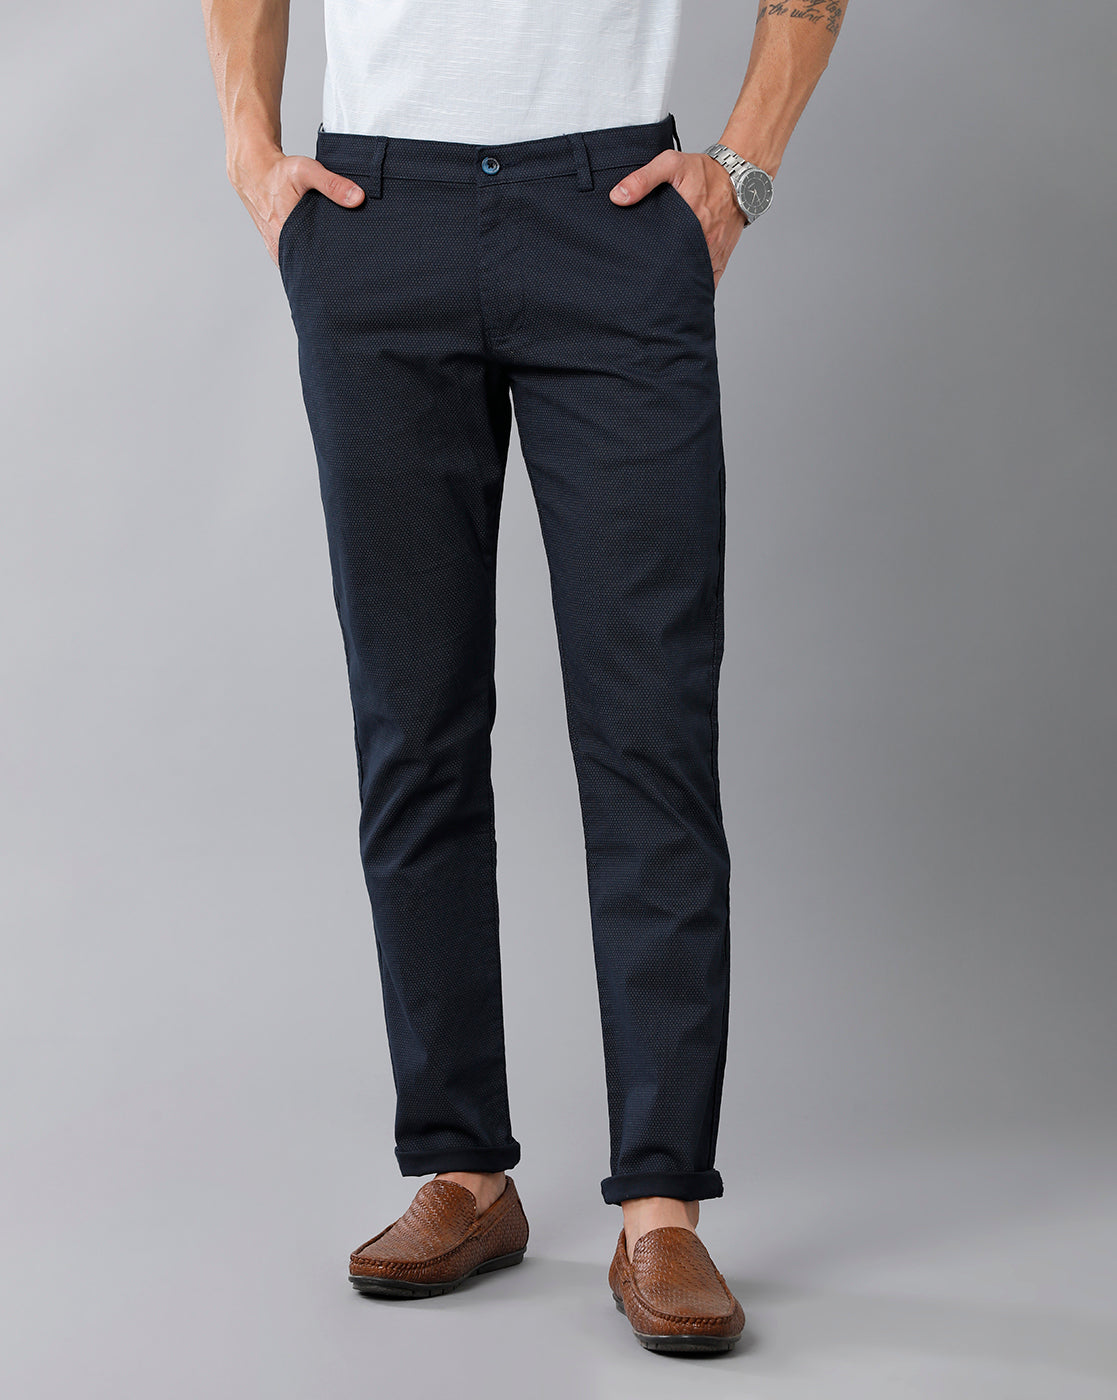 Polo Ralph Lauren Men's Khaki Pants classic straight pant 30x32 100% Cotton  NWT | eBay